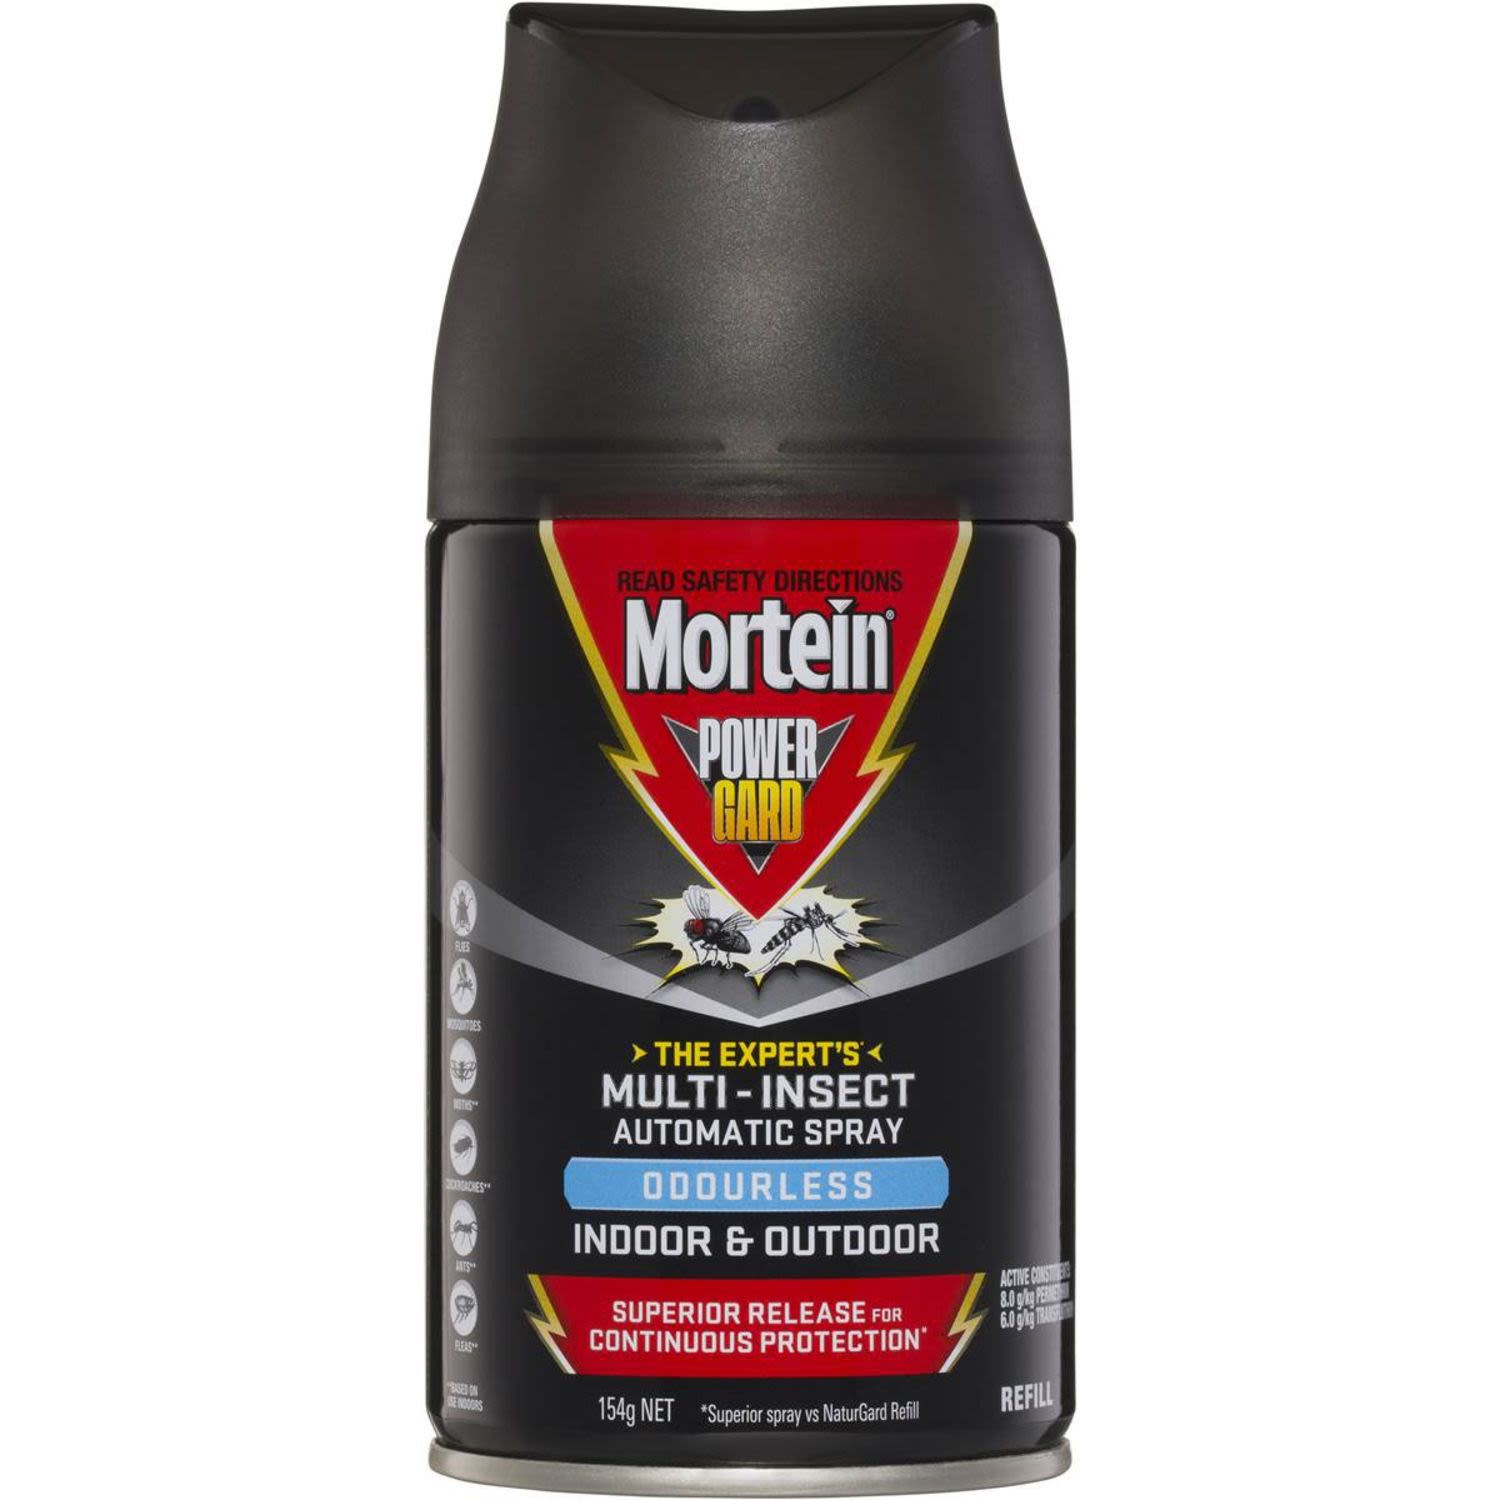 Mortein Powergard Multi Insect Spray Refill, 154 Gram